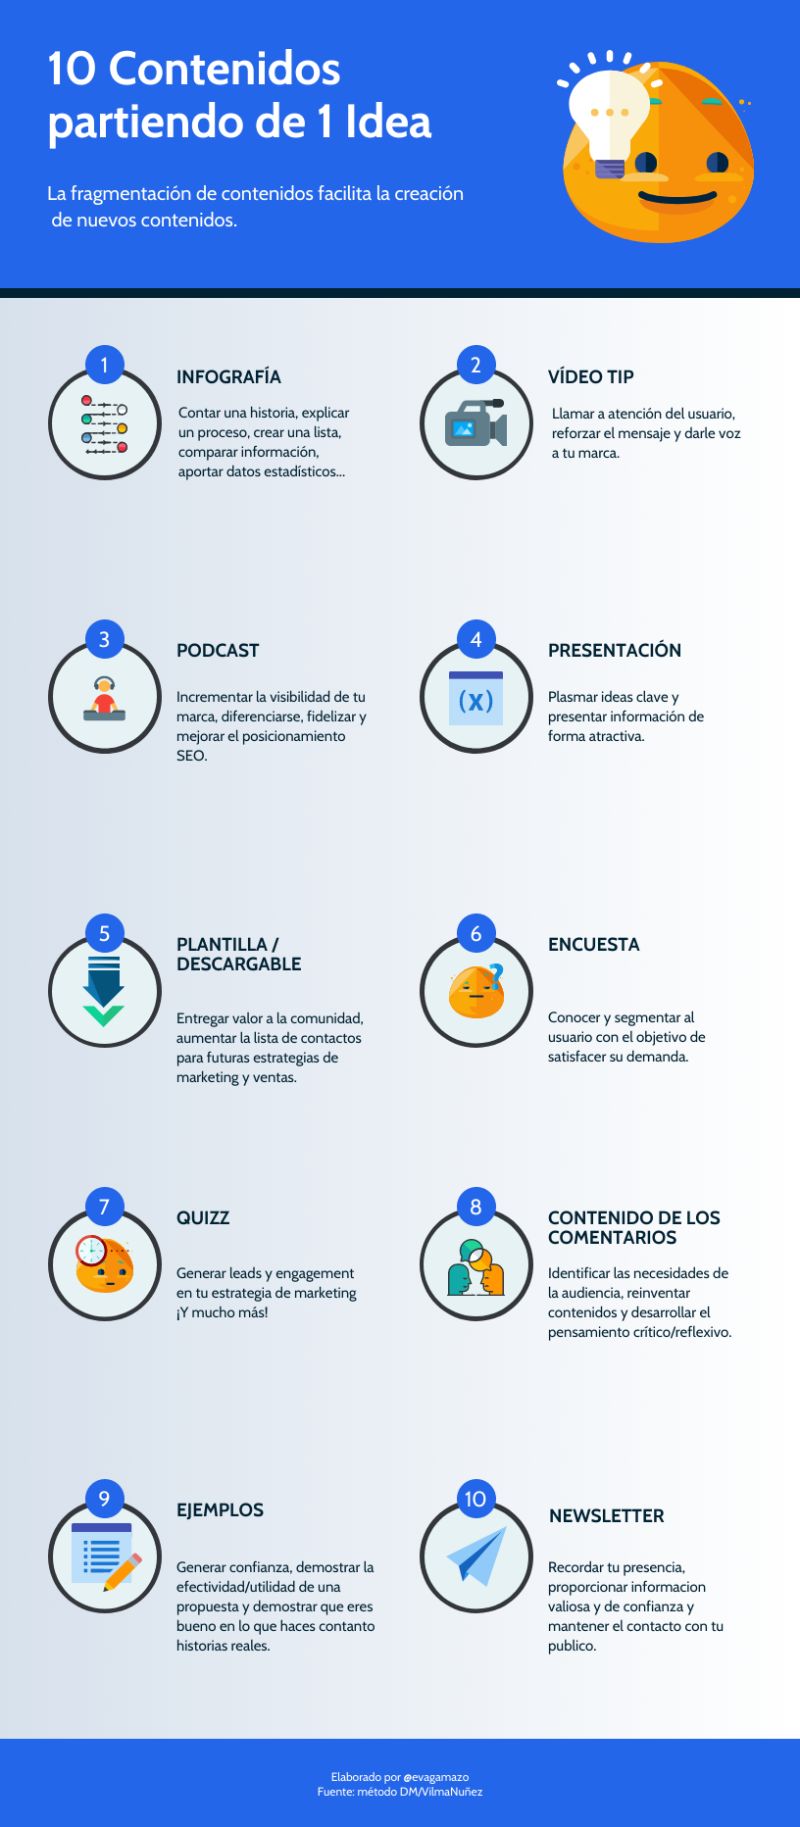 10 contenidos partiendo de una idea #infografia #infographic #marketing